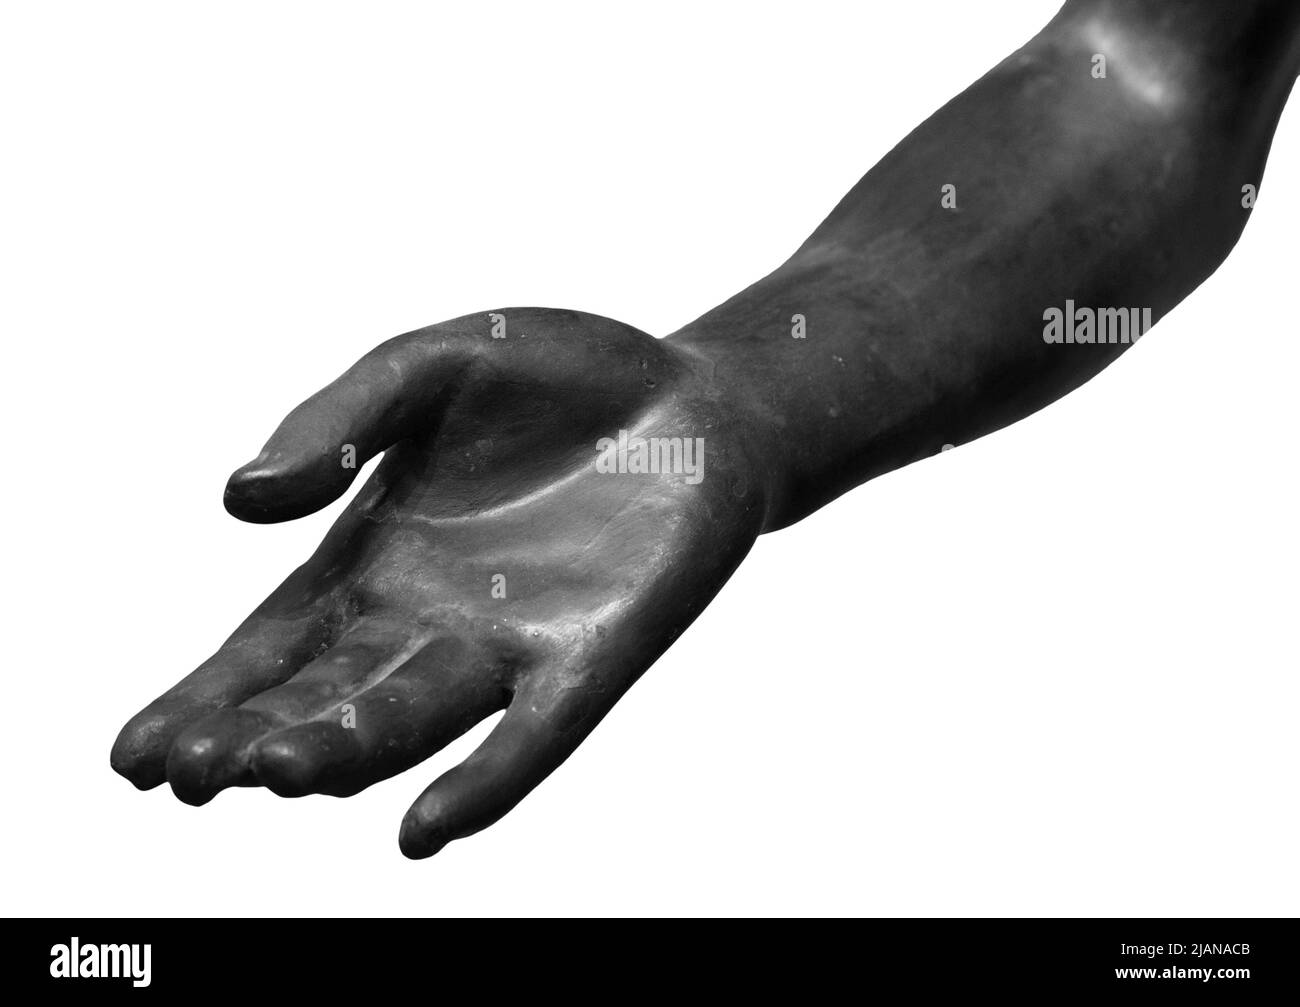 stone statue detail of human hand Stock Photo